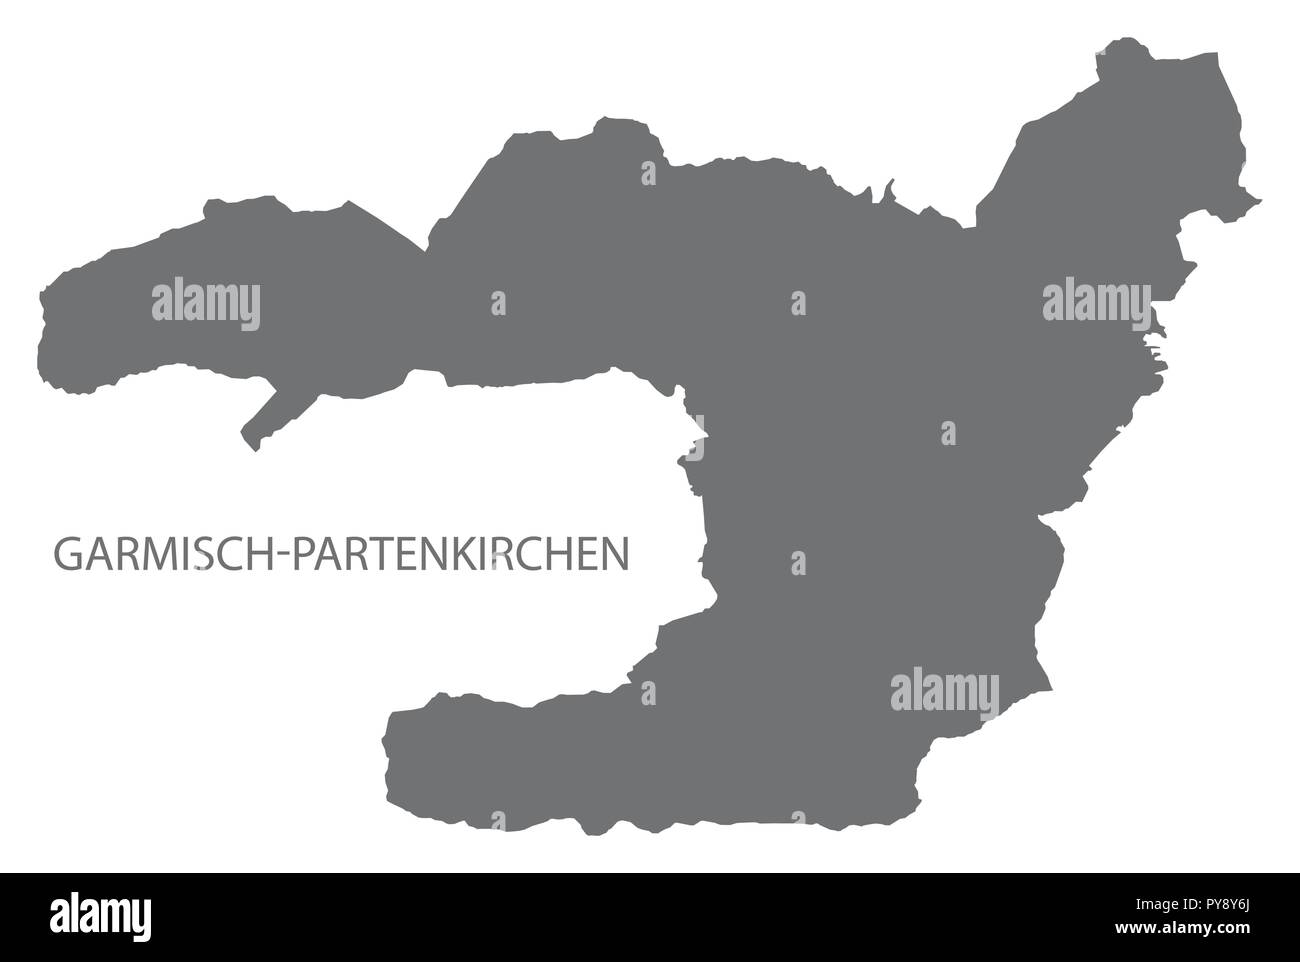 Garmisch-Partenkirchen administration area map grey illustration silhouette Stock Vector